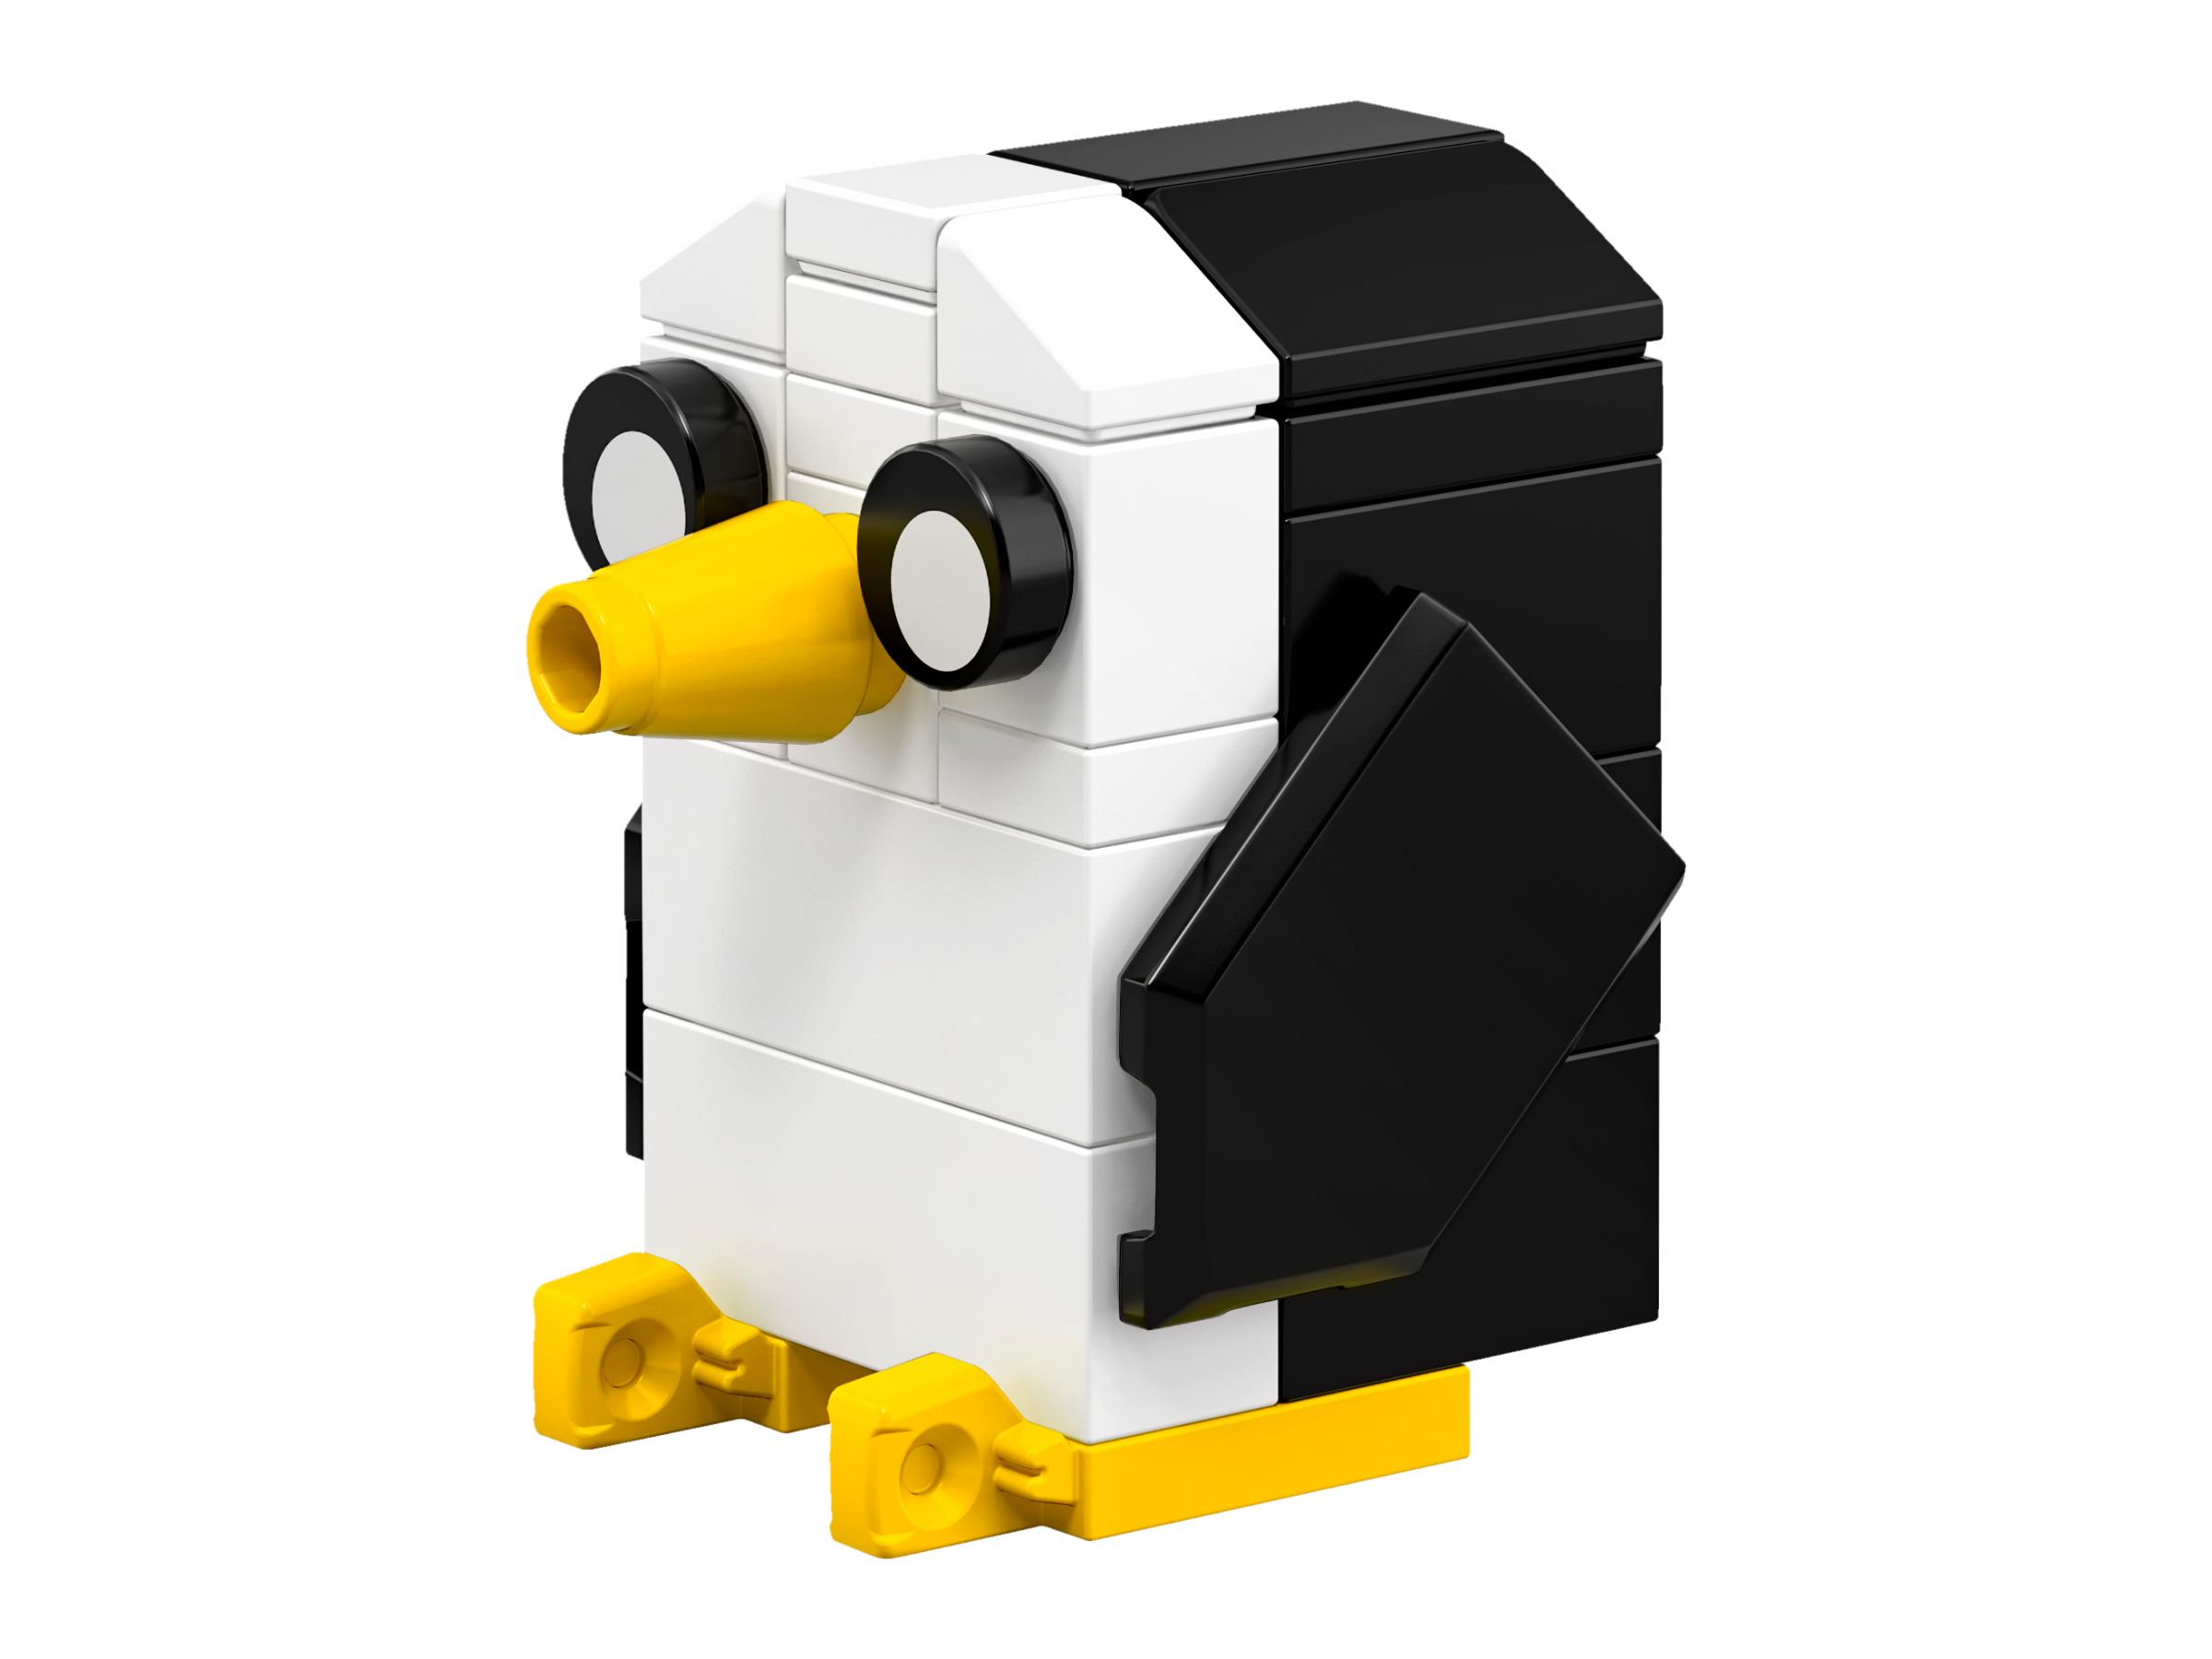 LEGO Ideas 21308 Adventure Time™ LEGO_21308_alt4.jpg